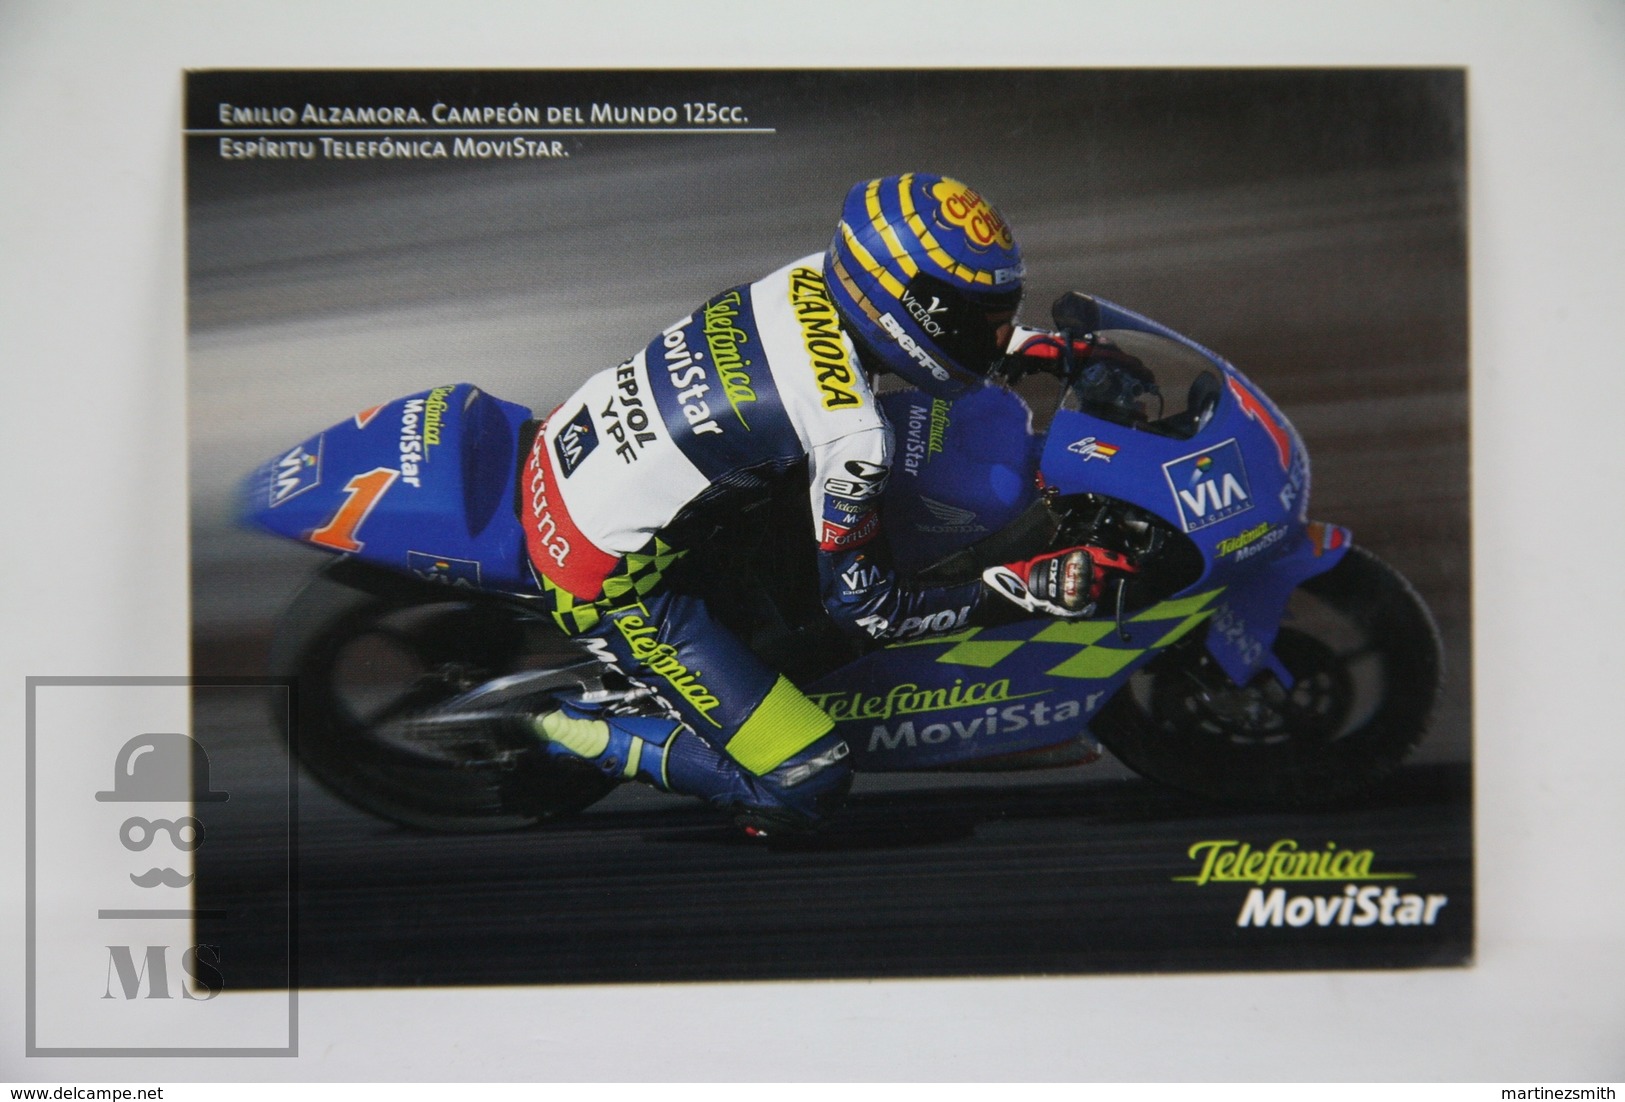 Embossed Advertising Postcard - Telefonica Movistar - Emilio Alzamora World Champion 125cc Motorcycle Racing - Motorbikes